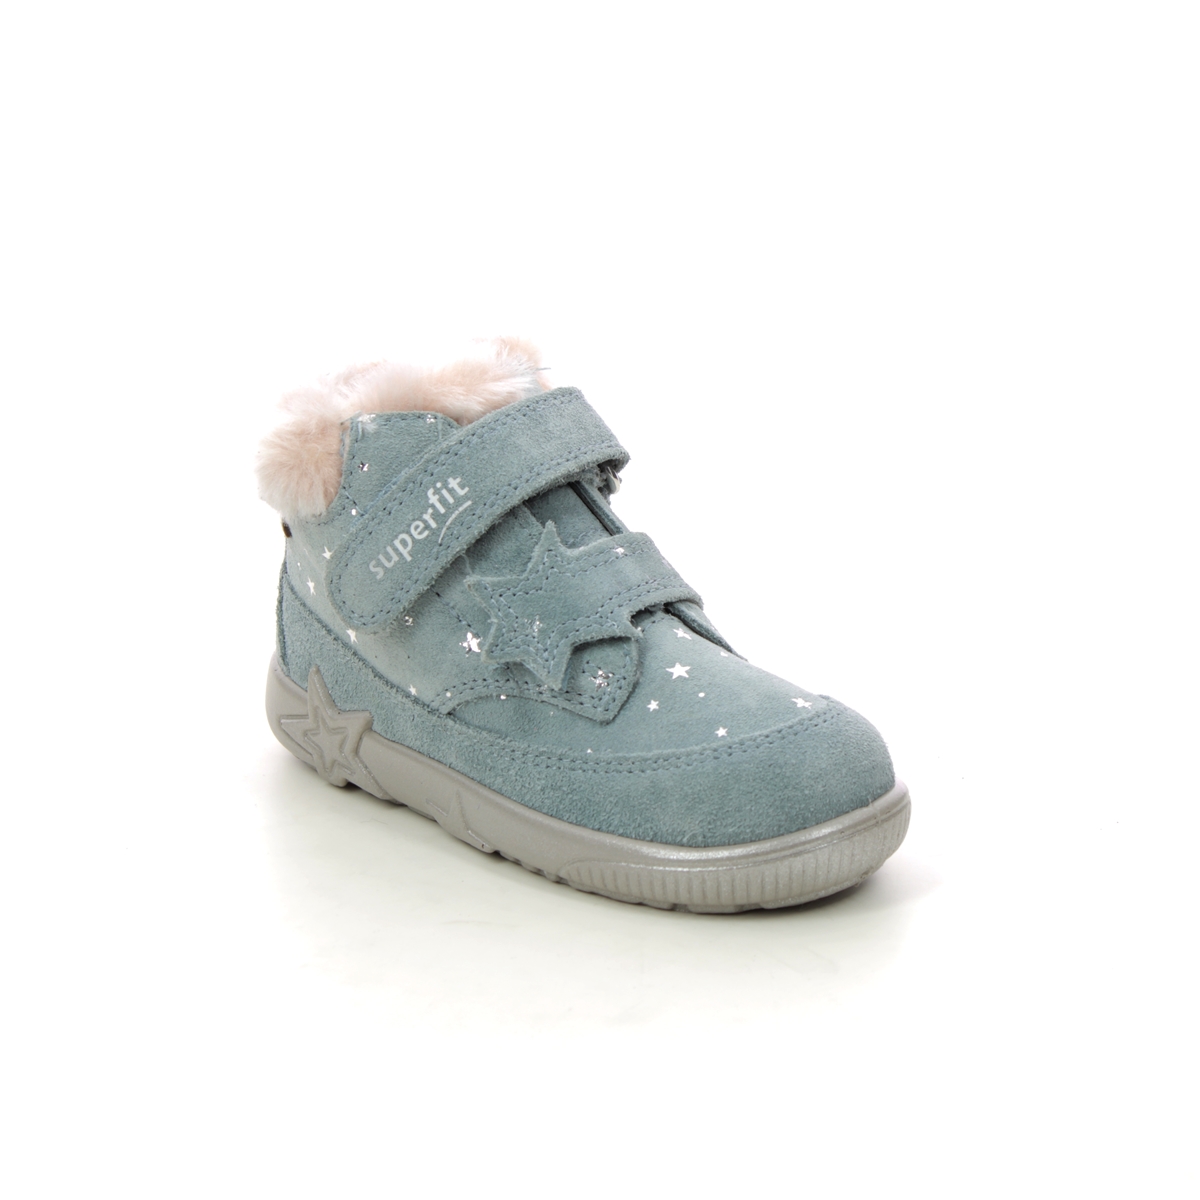 Superfit Starlight Gtx Light Blue Kids Toddler Girls Boots 1006445-7500 In Size 25 In Plain Light Blue For kids